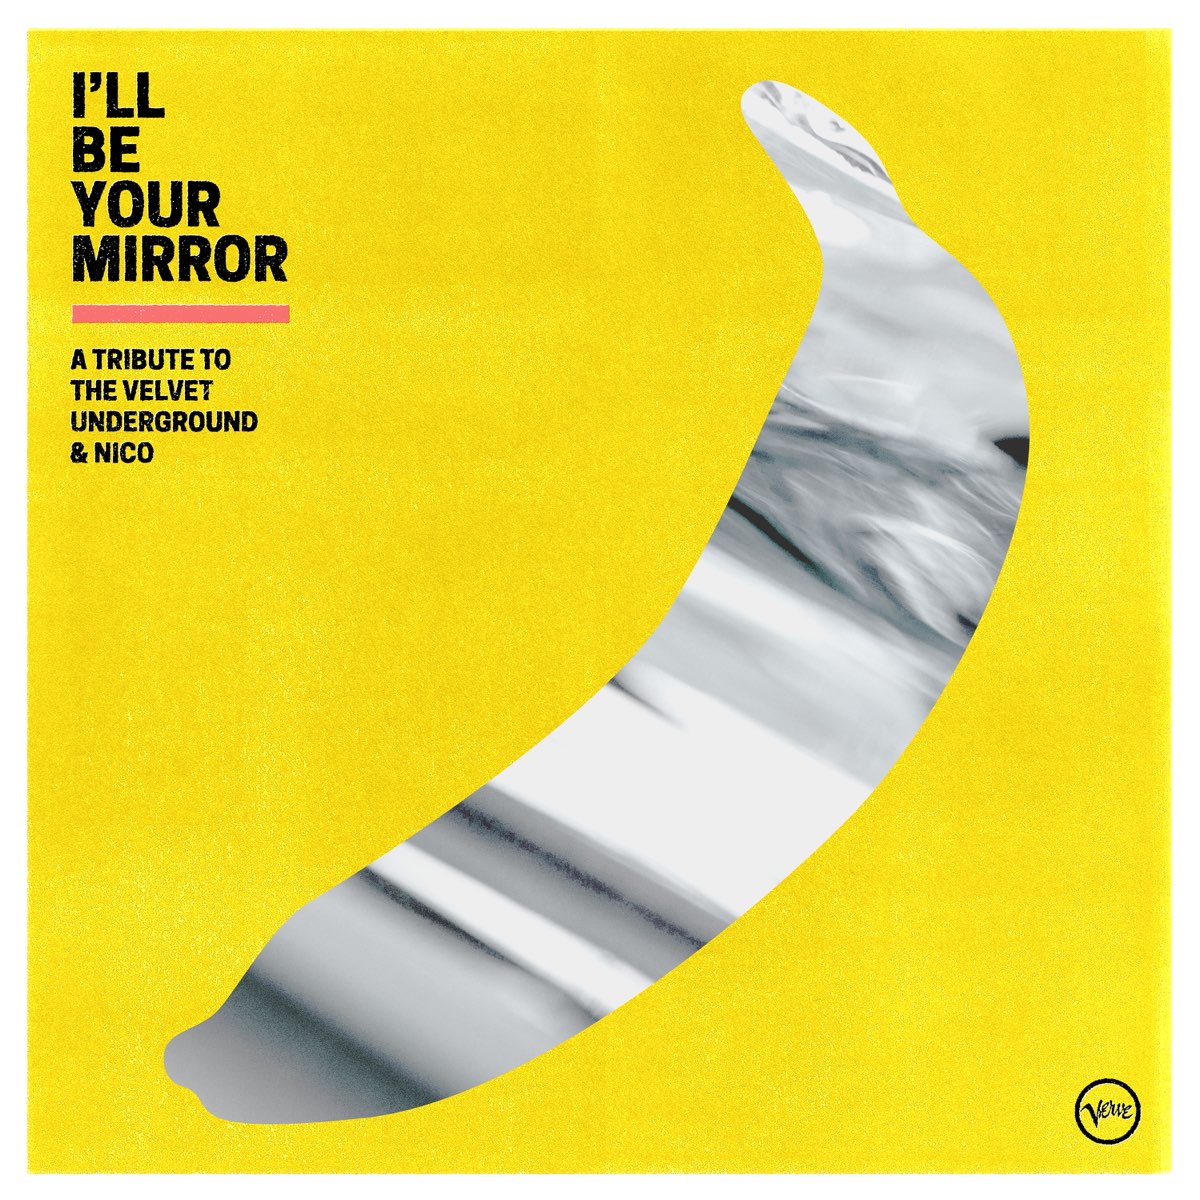 Ill-Be-Your-Mirror-Tribute-The-Velvet-Underground_2021